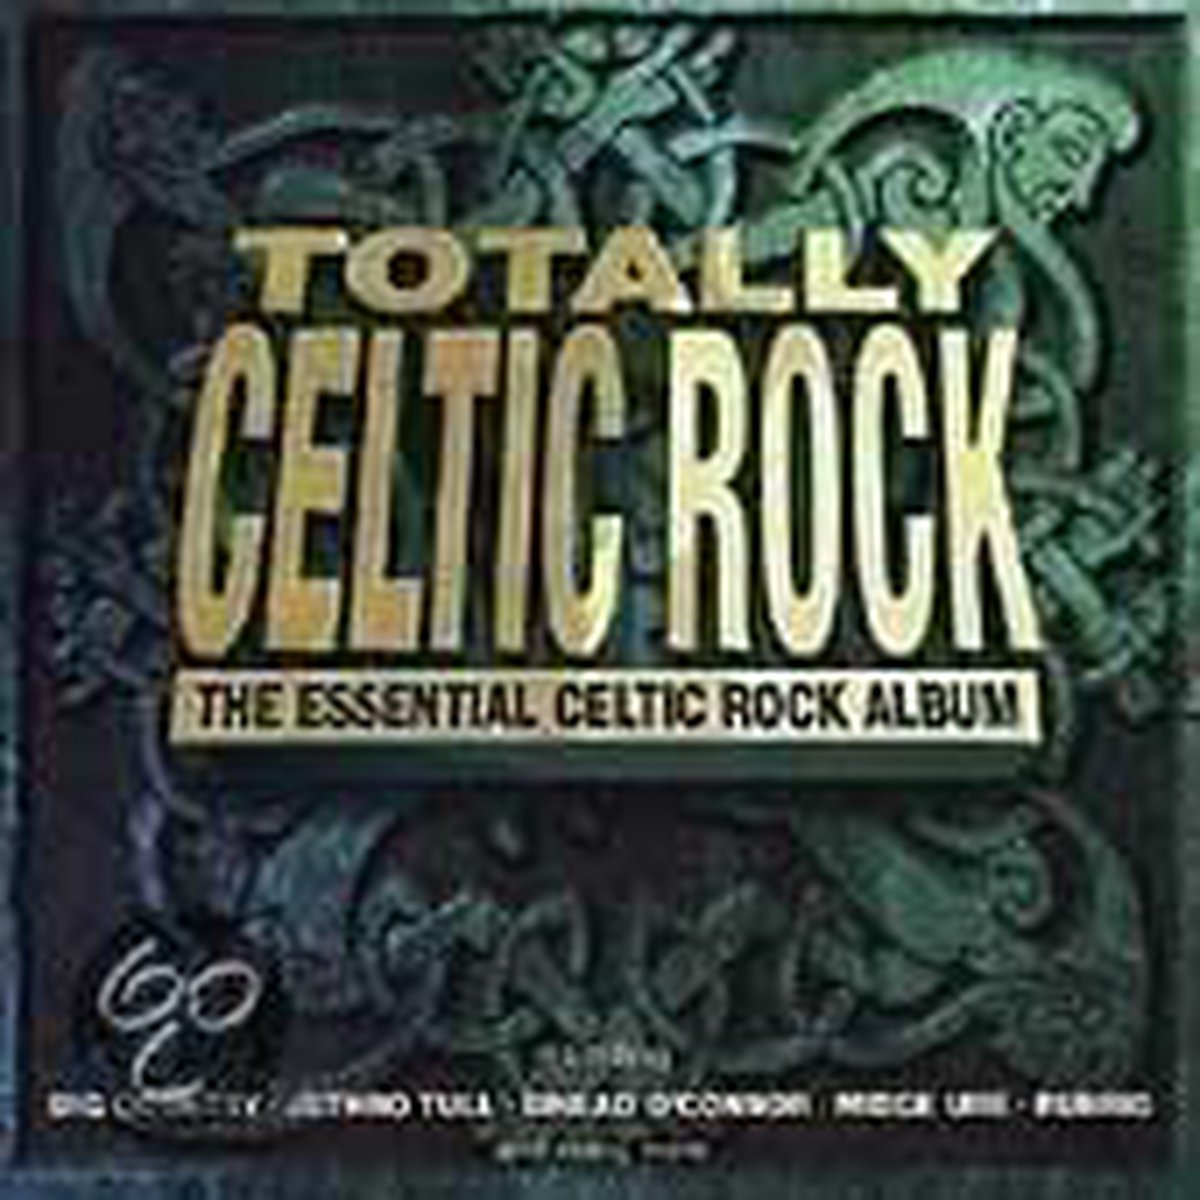 Totally Celtic Rock: The Essential Celtic Rock Album - various artists